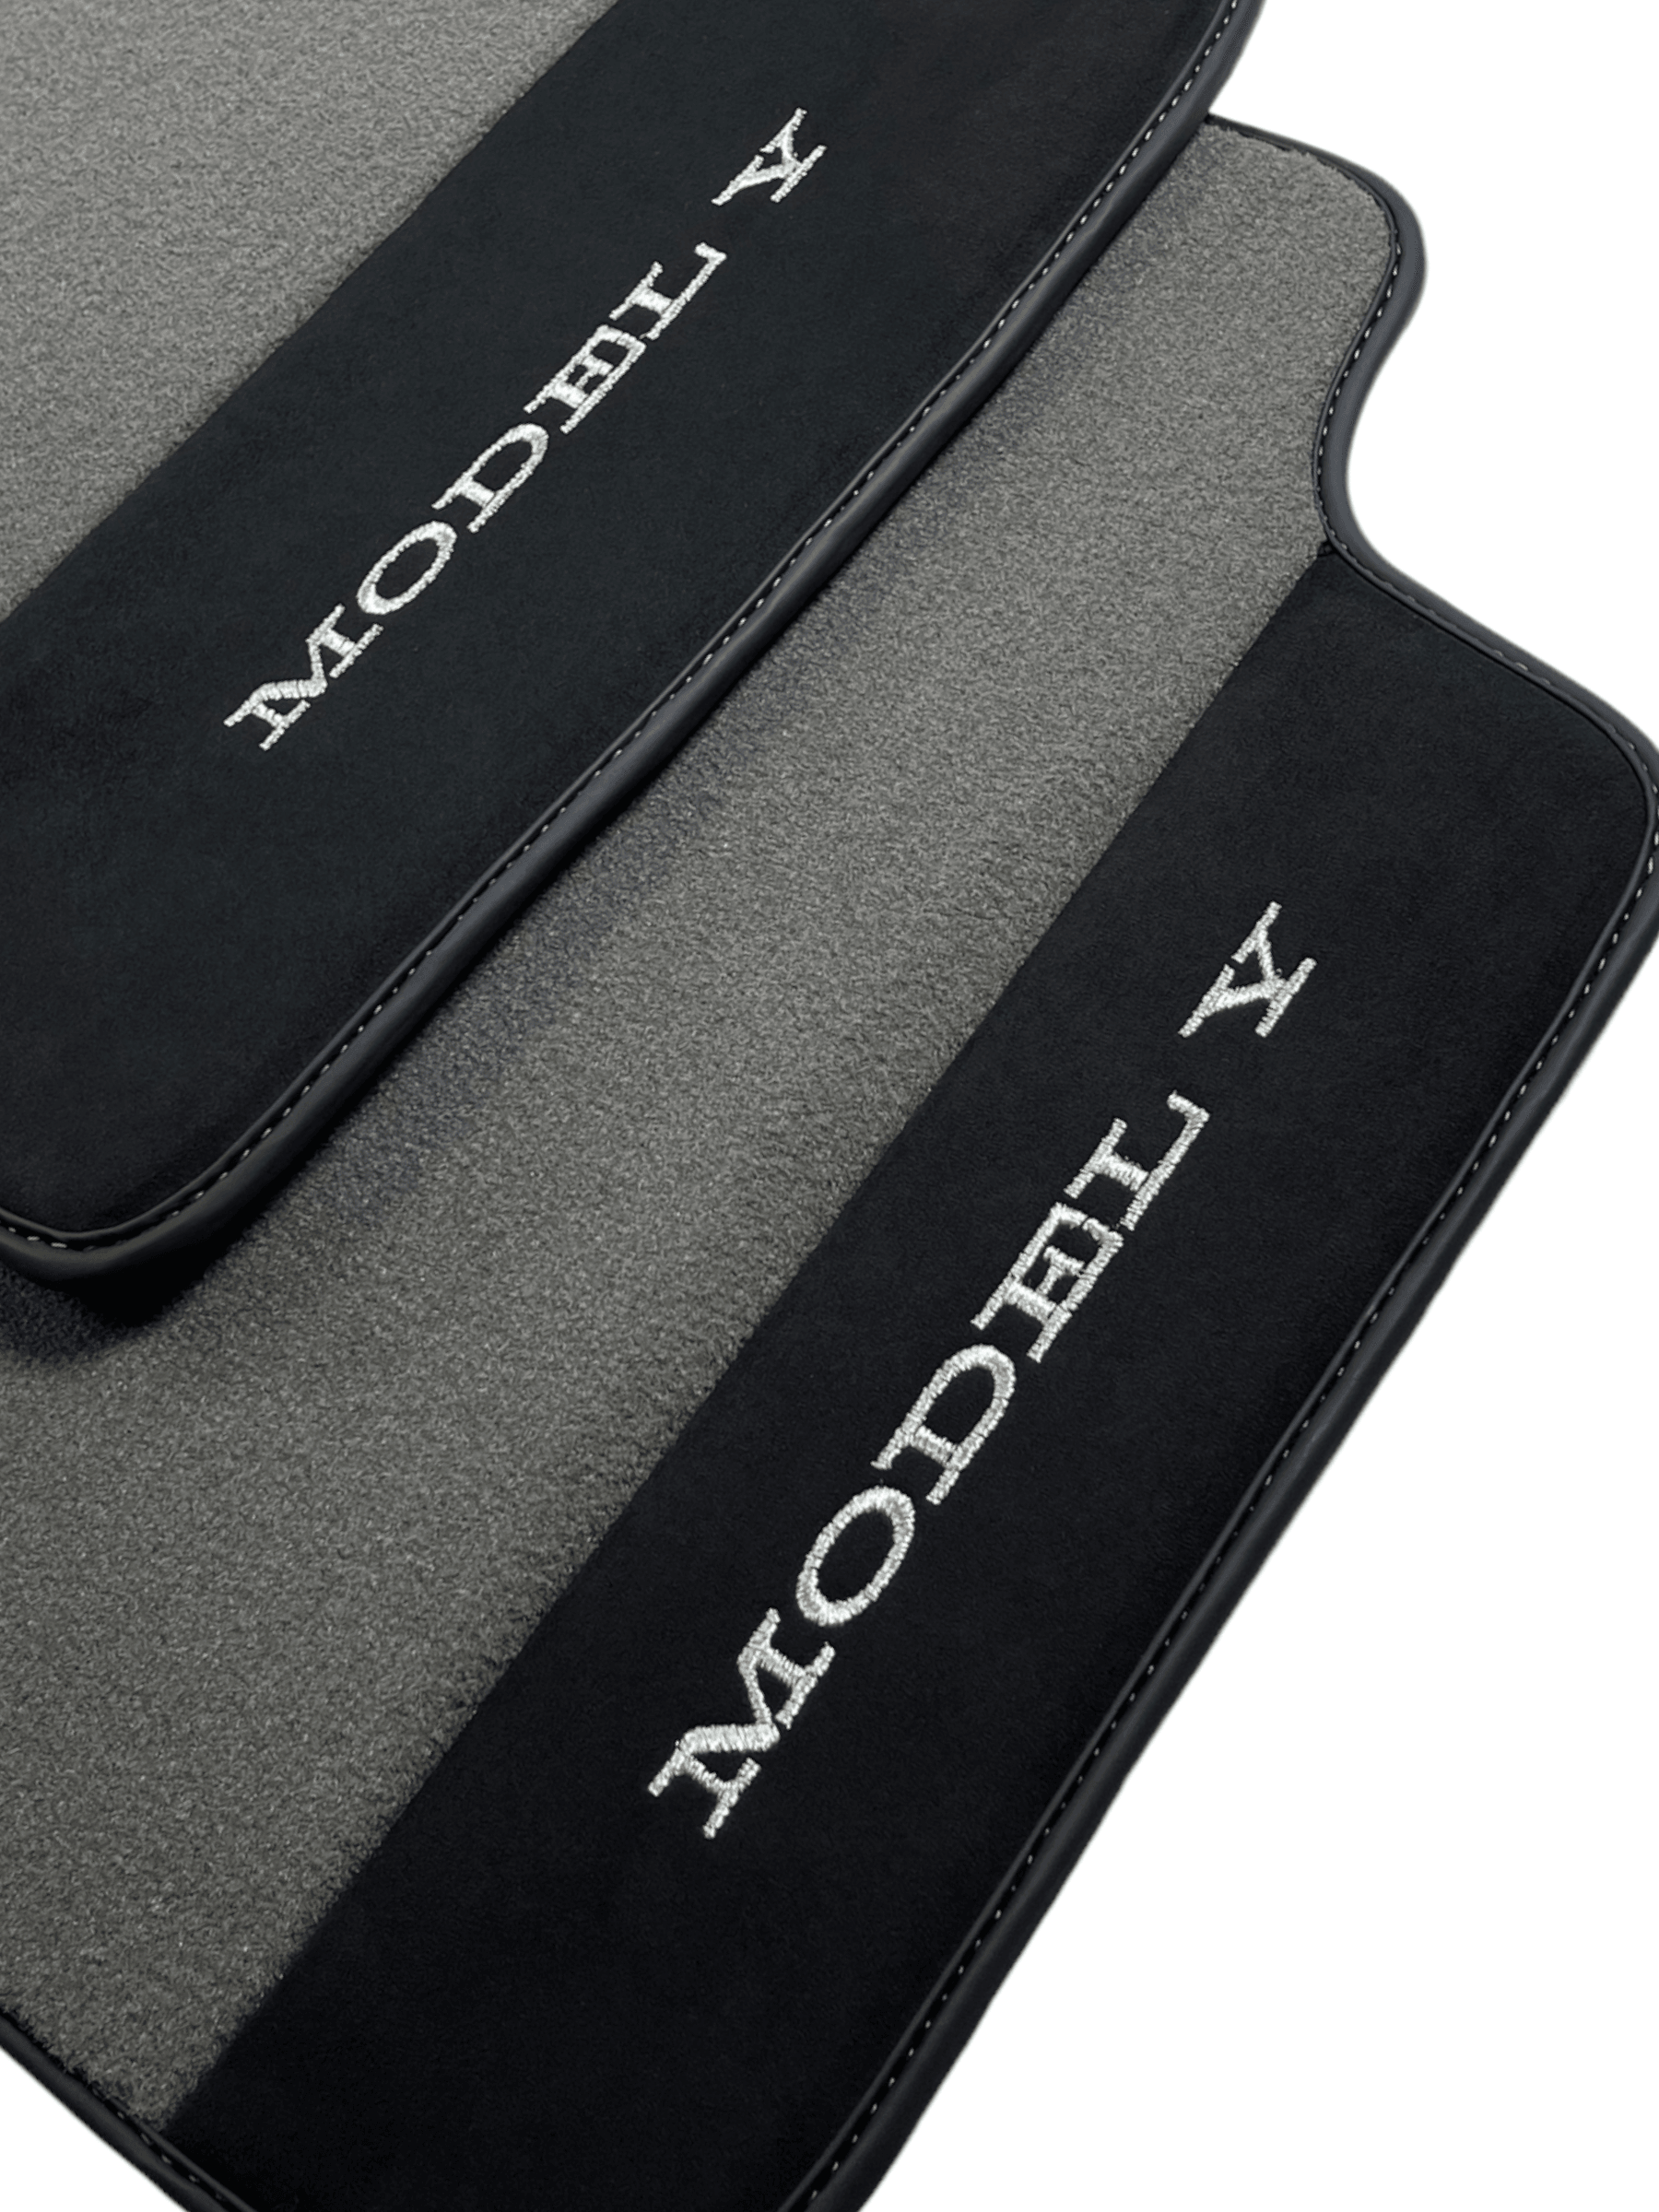 Gray Floor Mats For Tesla Model Y With Alcantara Leather - AutoWin